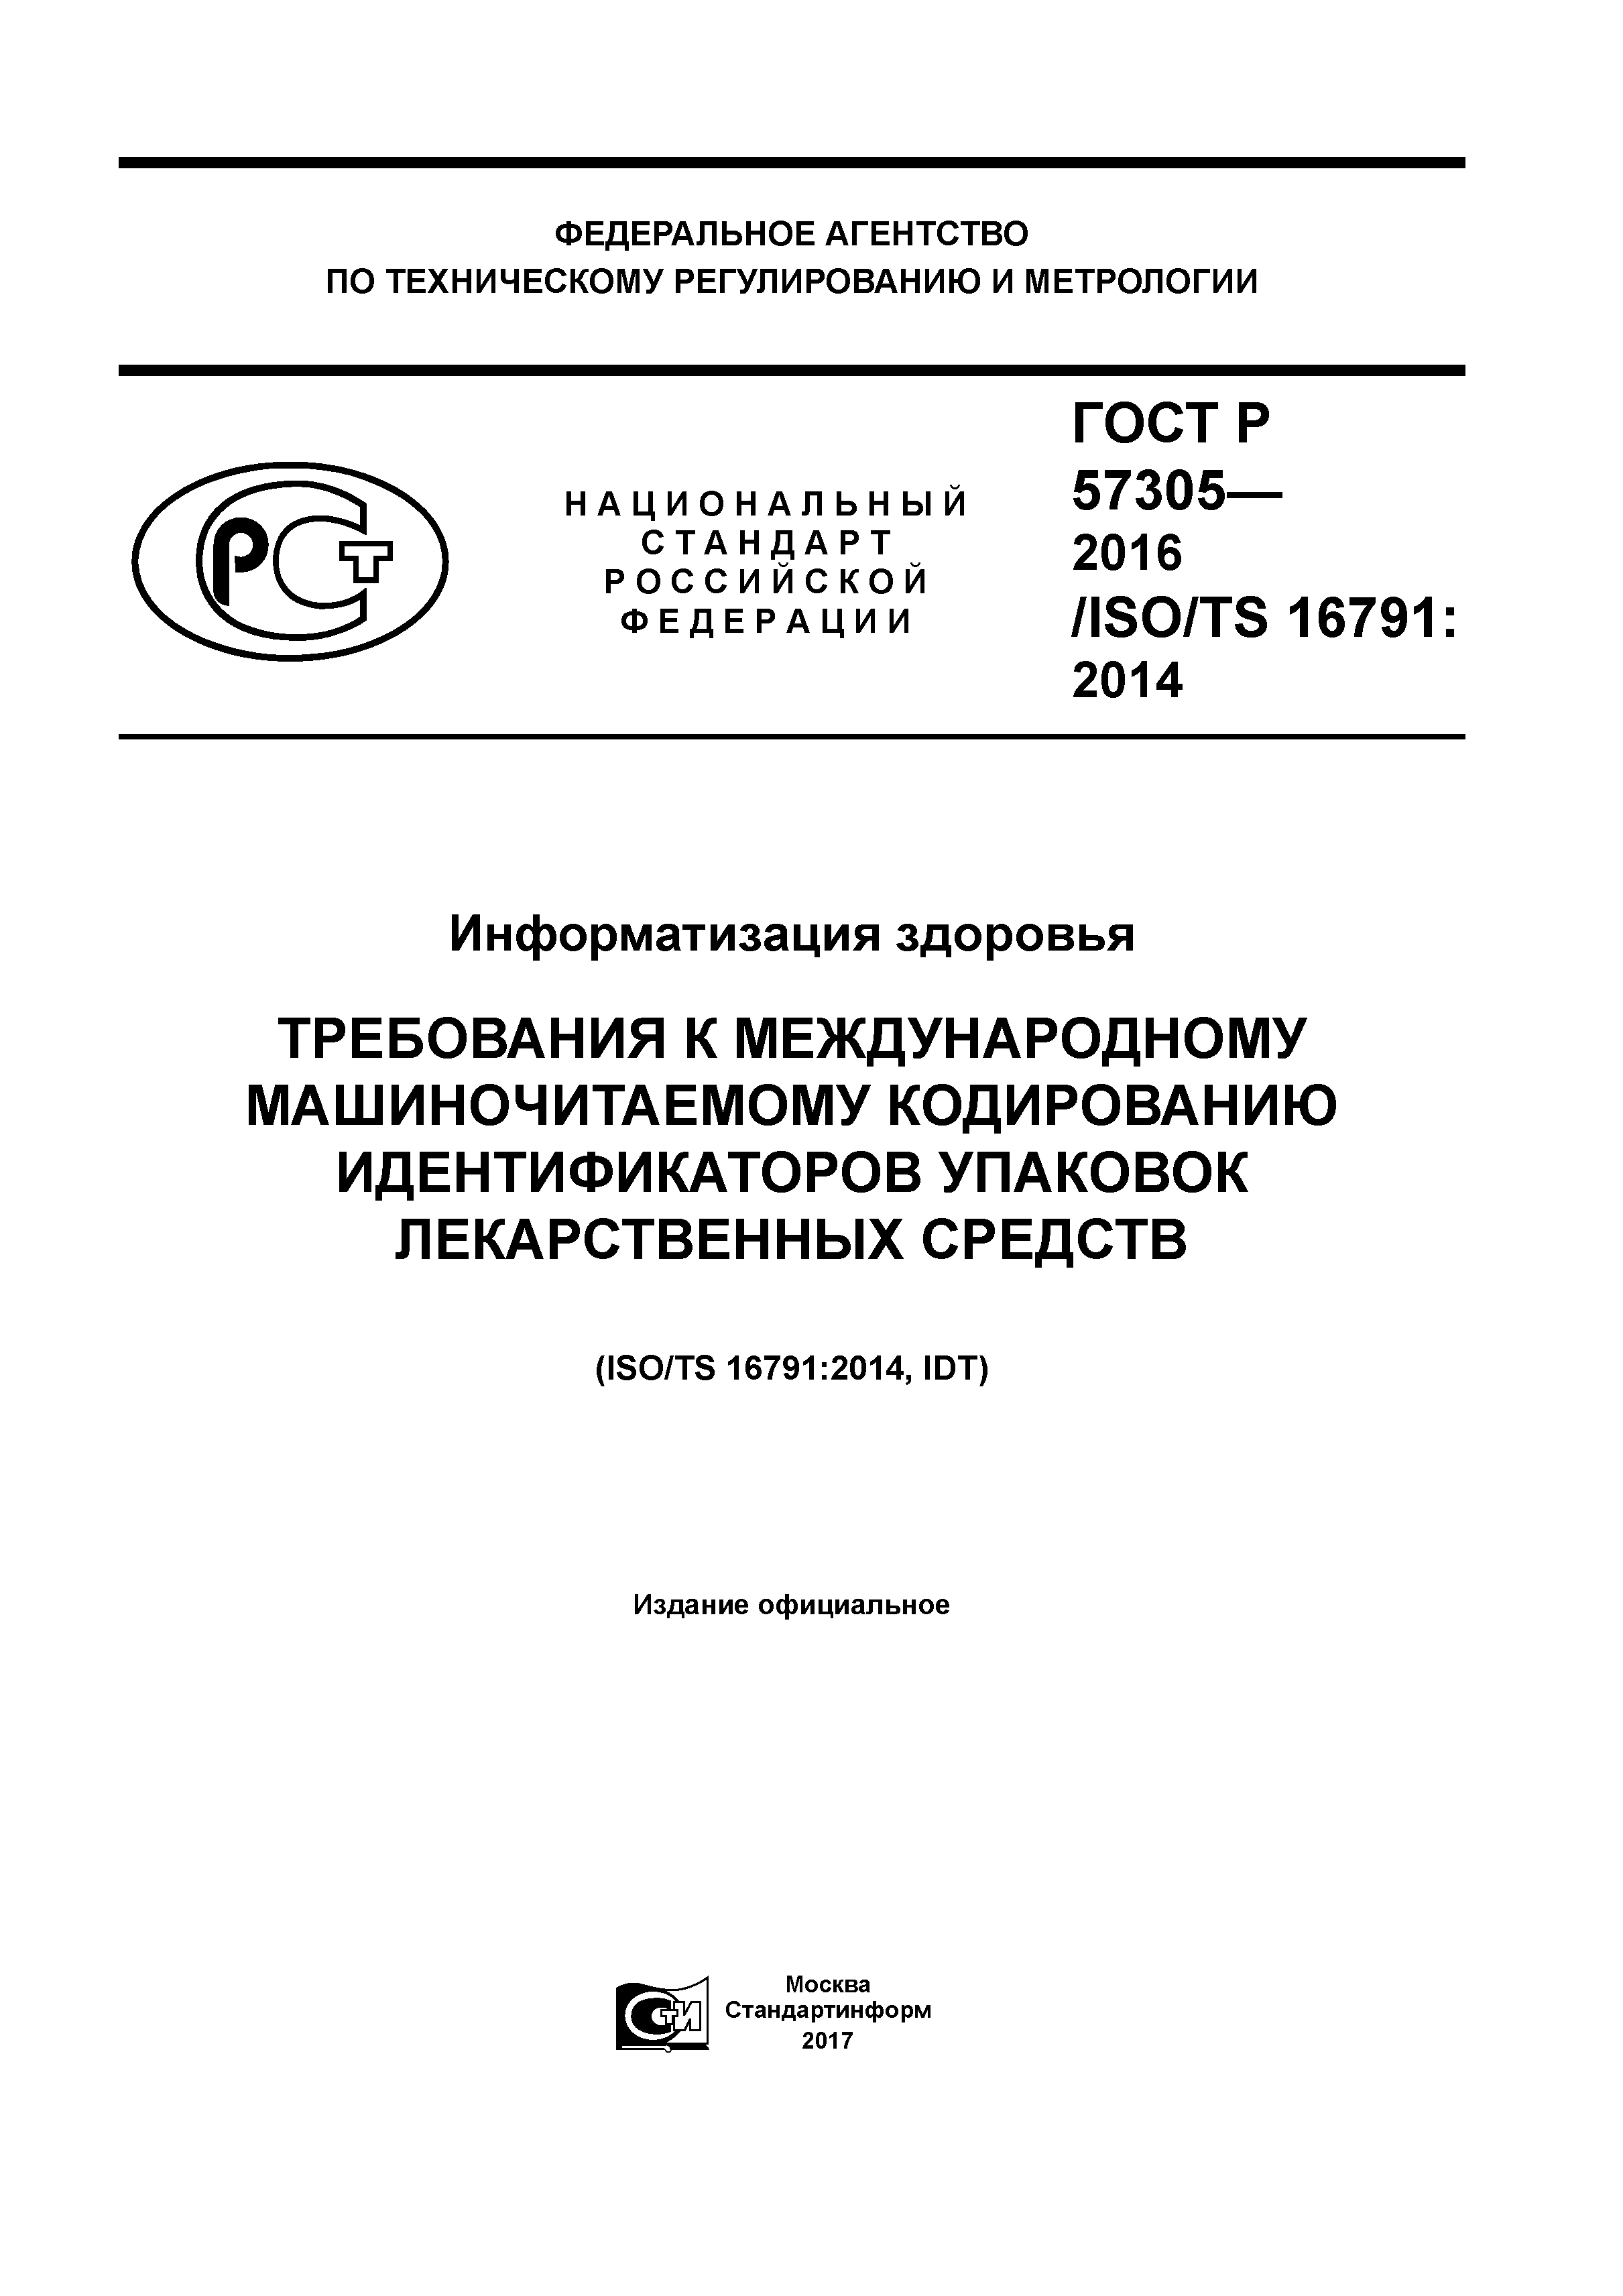 ГОСТ Р 57305-2016